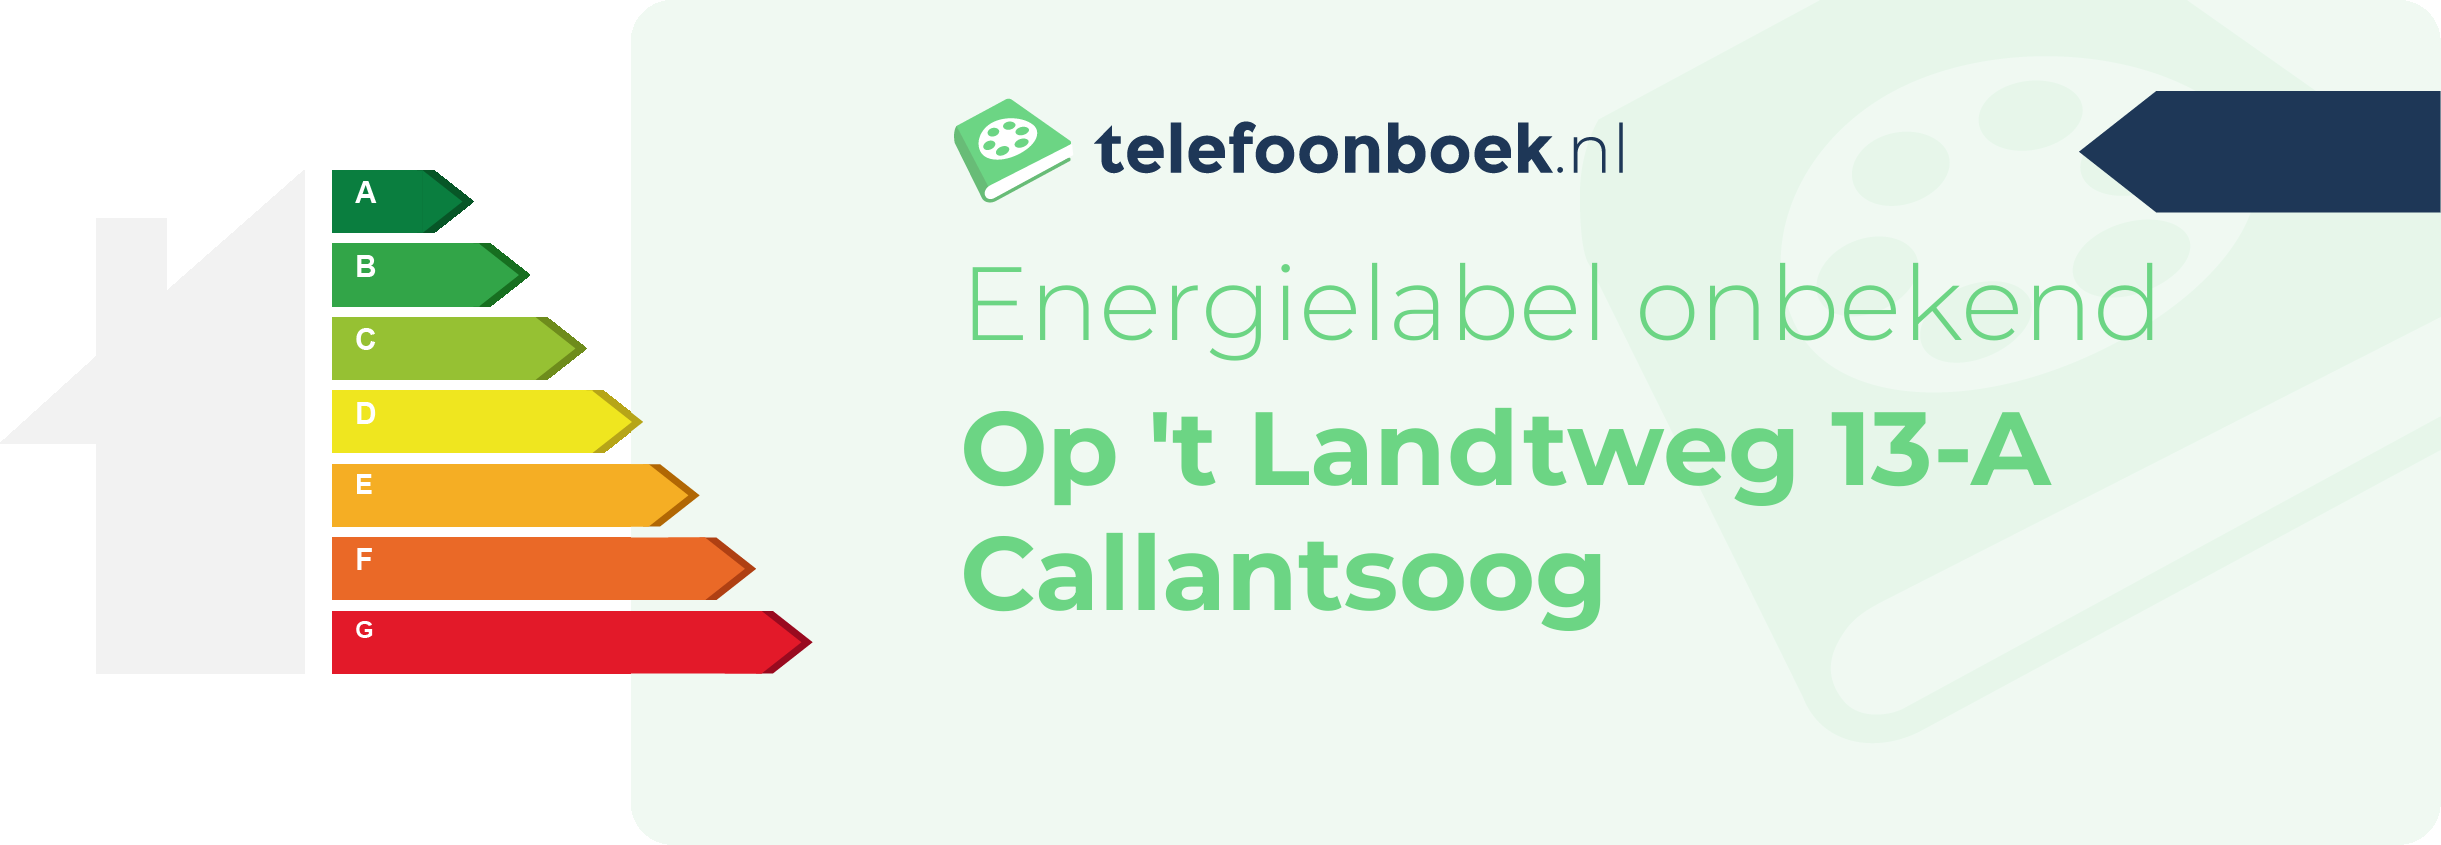 Energielabel Op 't Landtweg 13-A Callantsoog